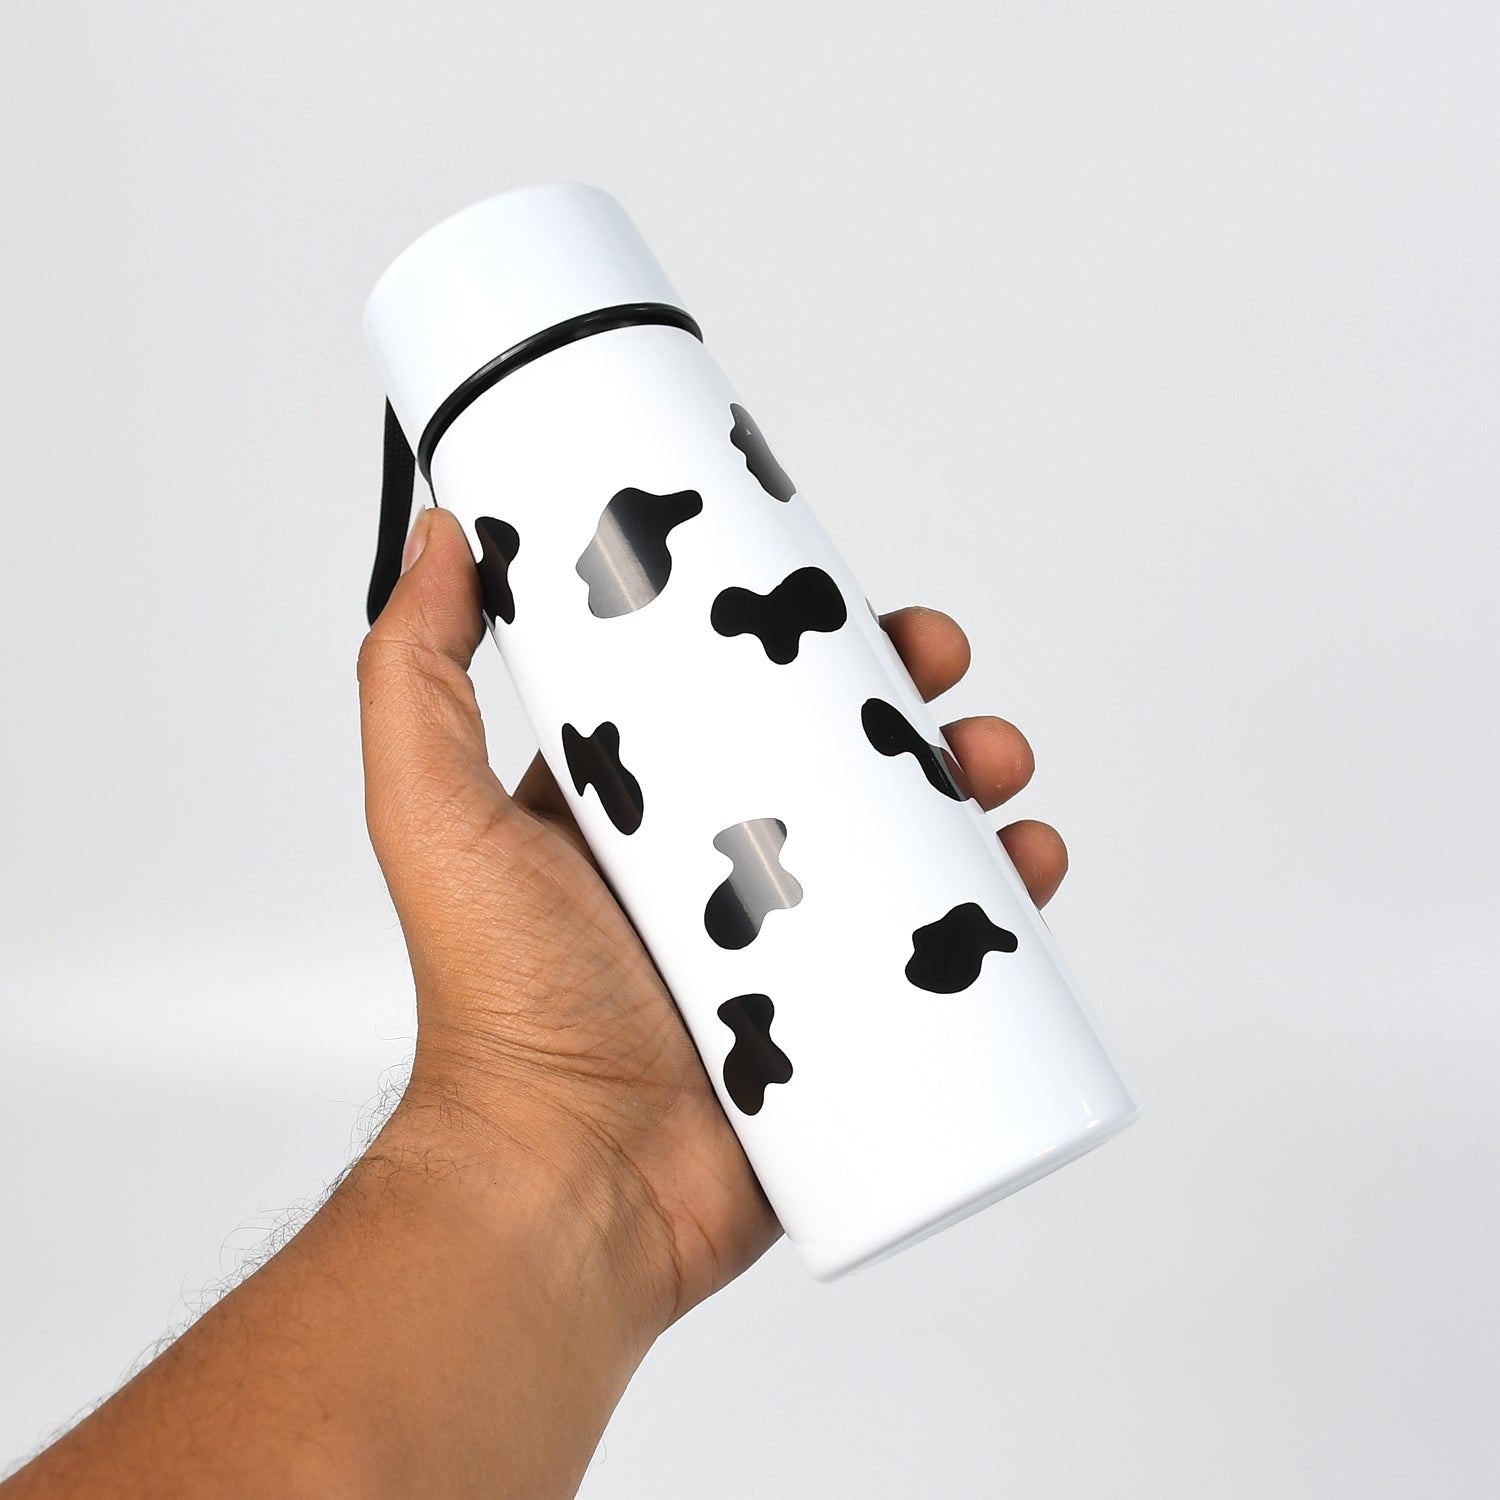 6784 Cow Print Stainless Steel Design Water Bottle Easy To Carry Bottle Leak-Proof Bottle For Office Bottle | Gym Bottle | Home | Kitchen | Hiking | Treking Bottle | Travel Bottle  ( 400ml ) DeoDap